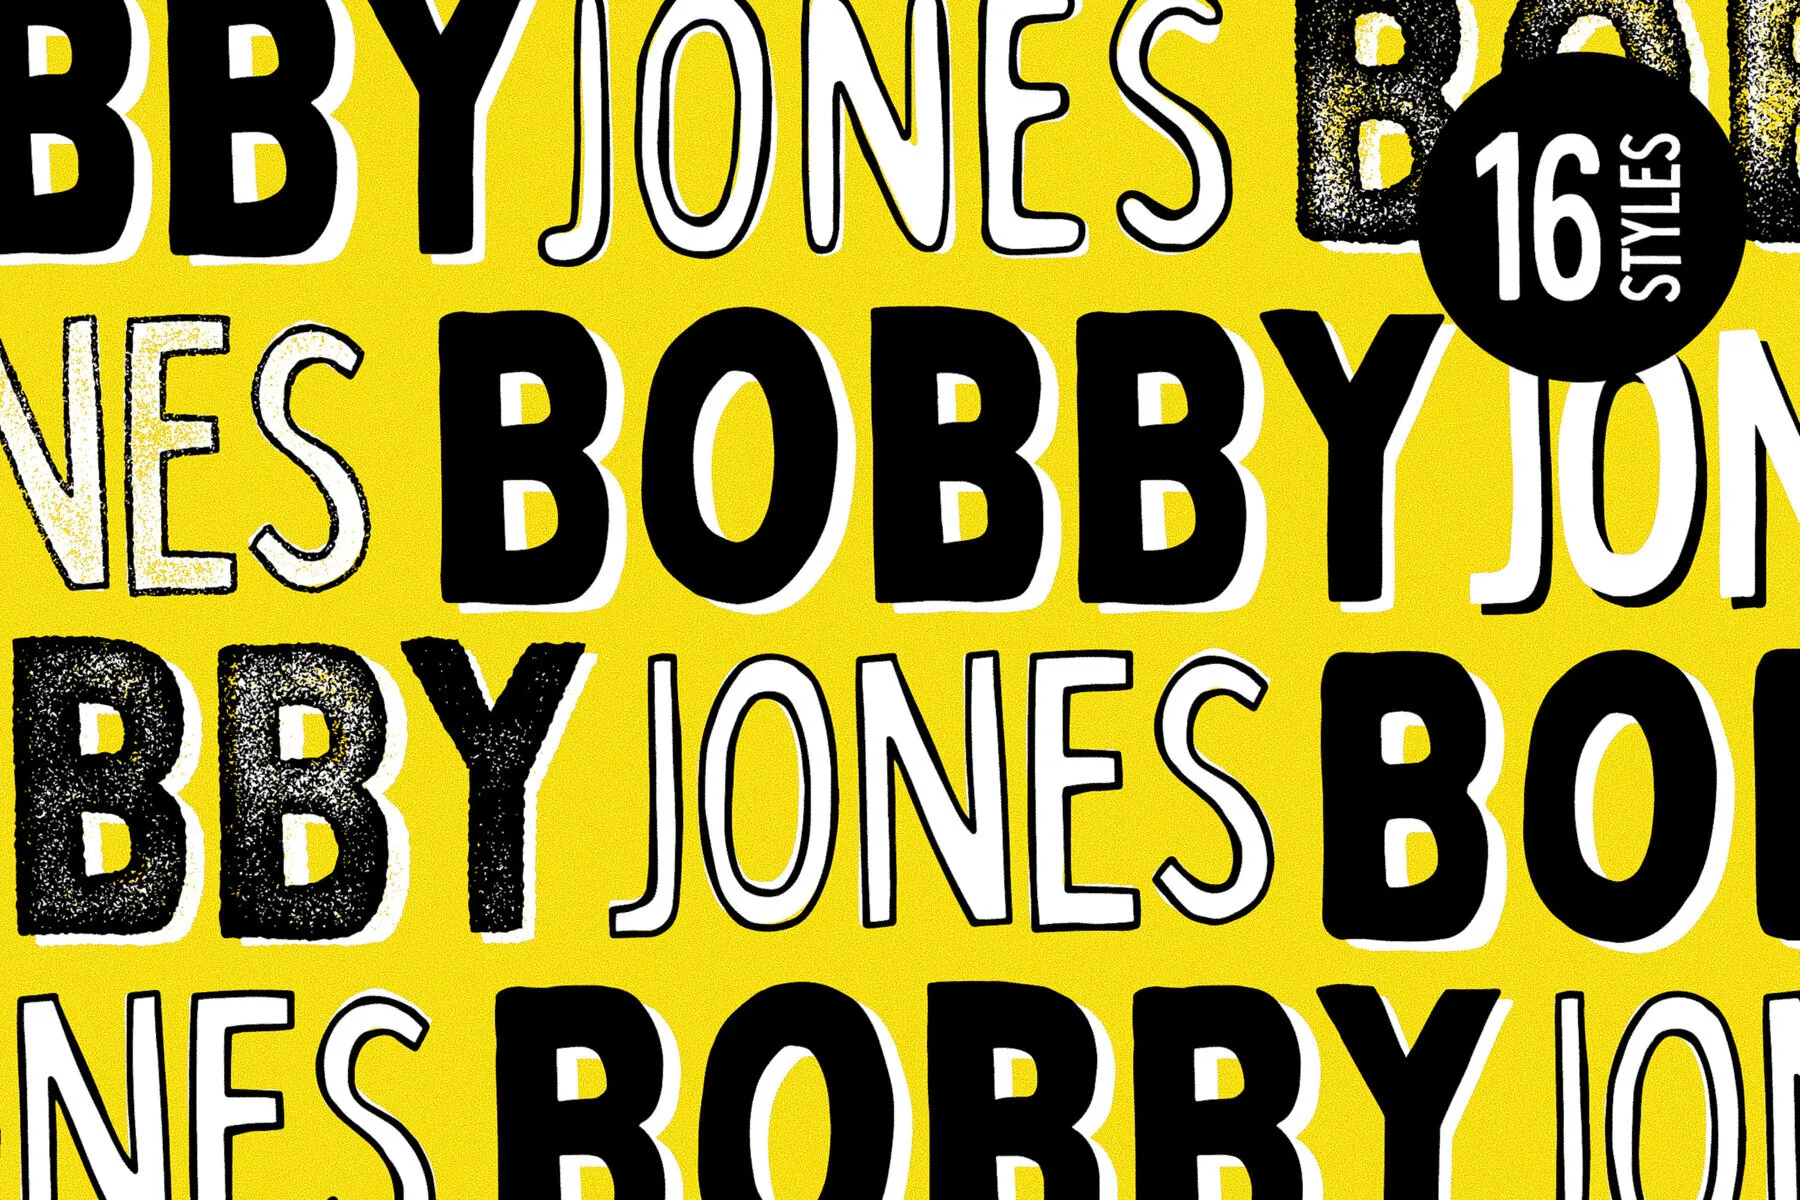 Bobby Jones